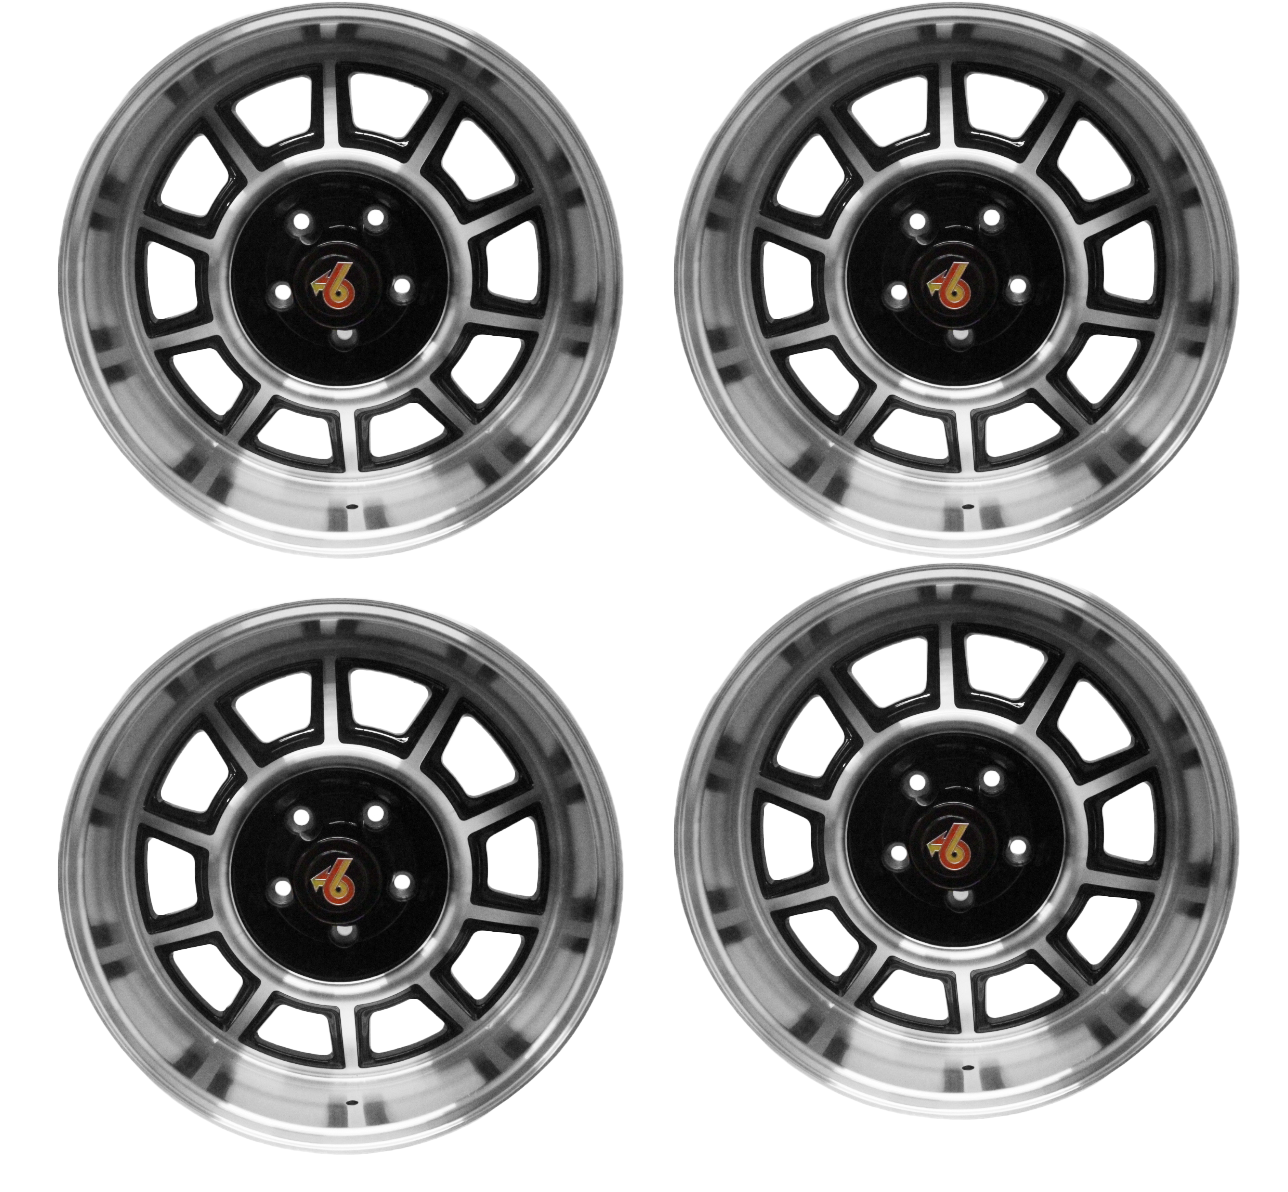 Grand National 18" x 8" Aluminum Wheels Rims (Set of 4)